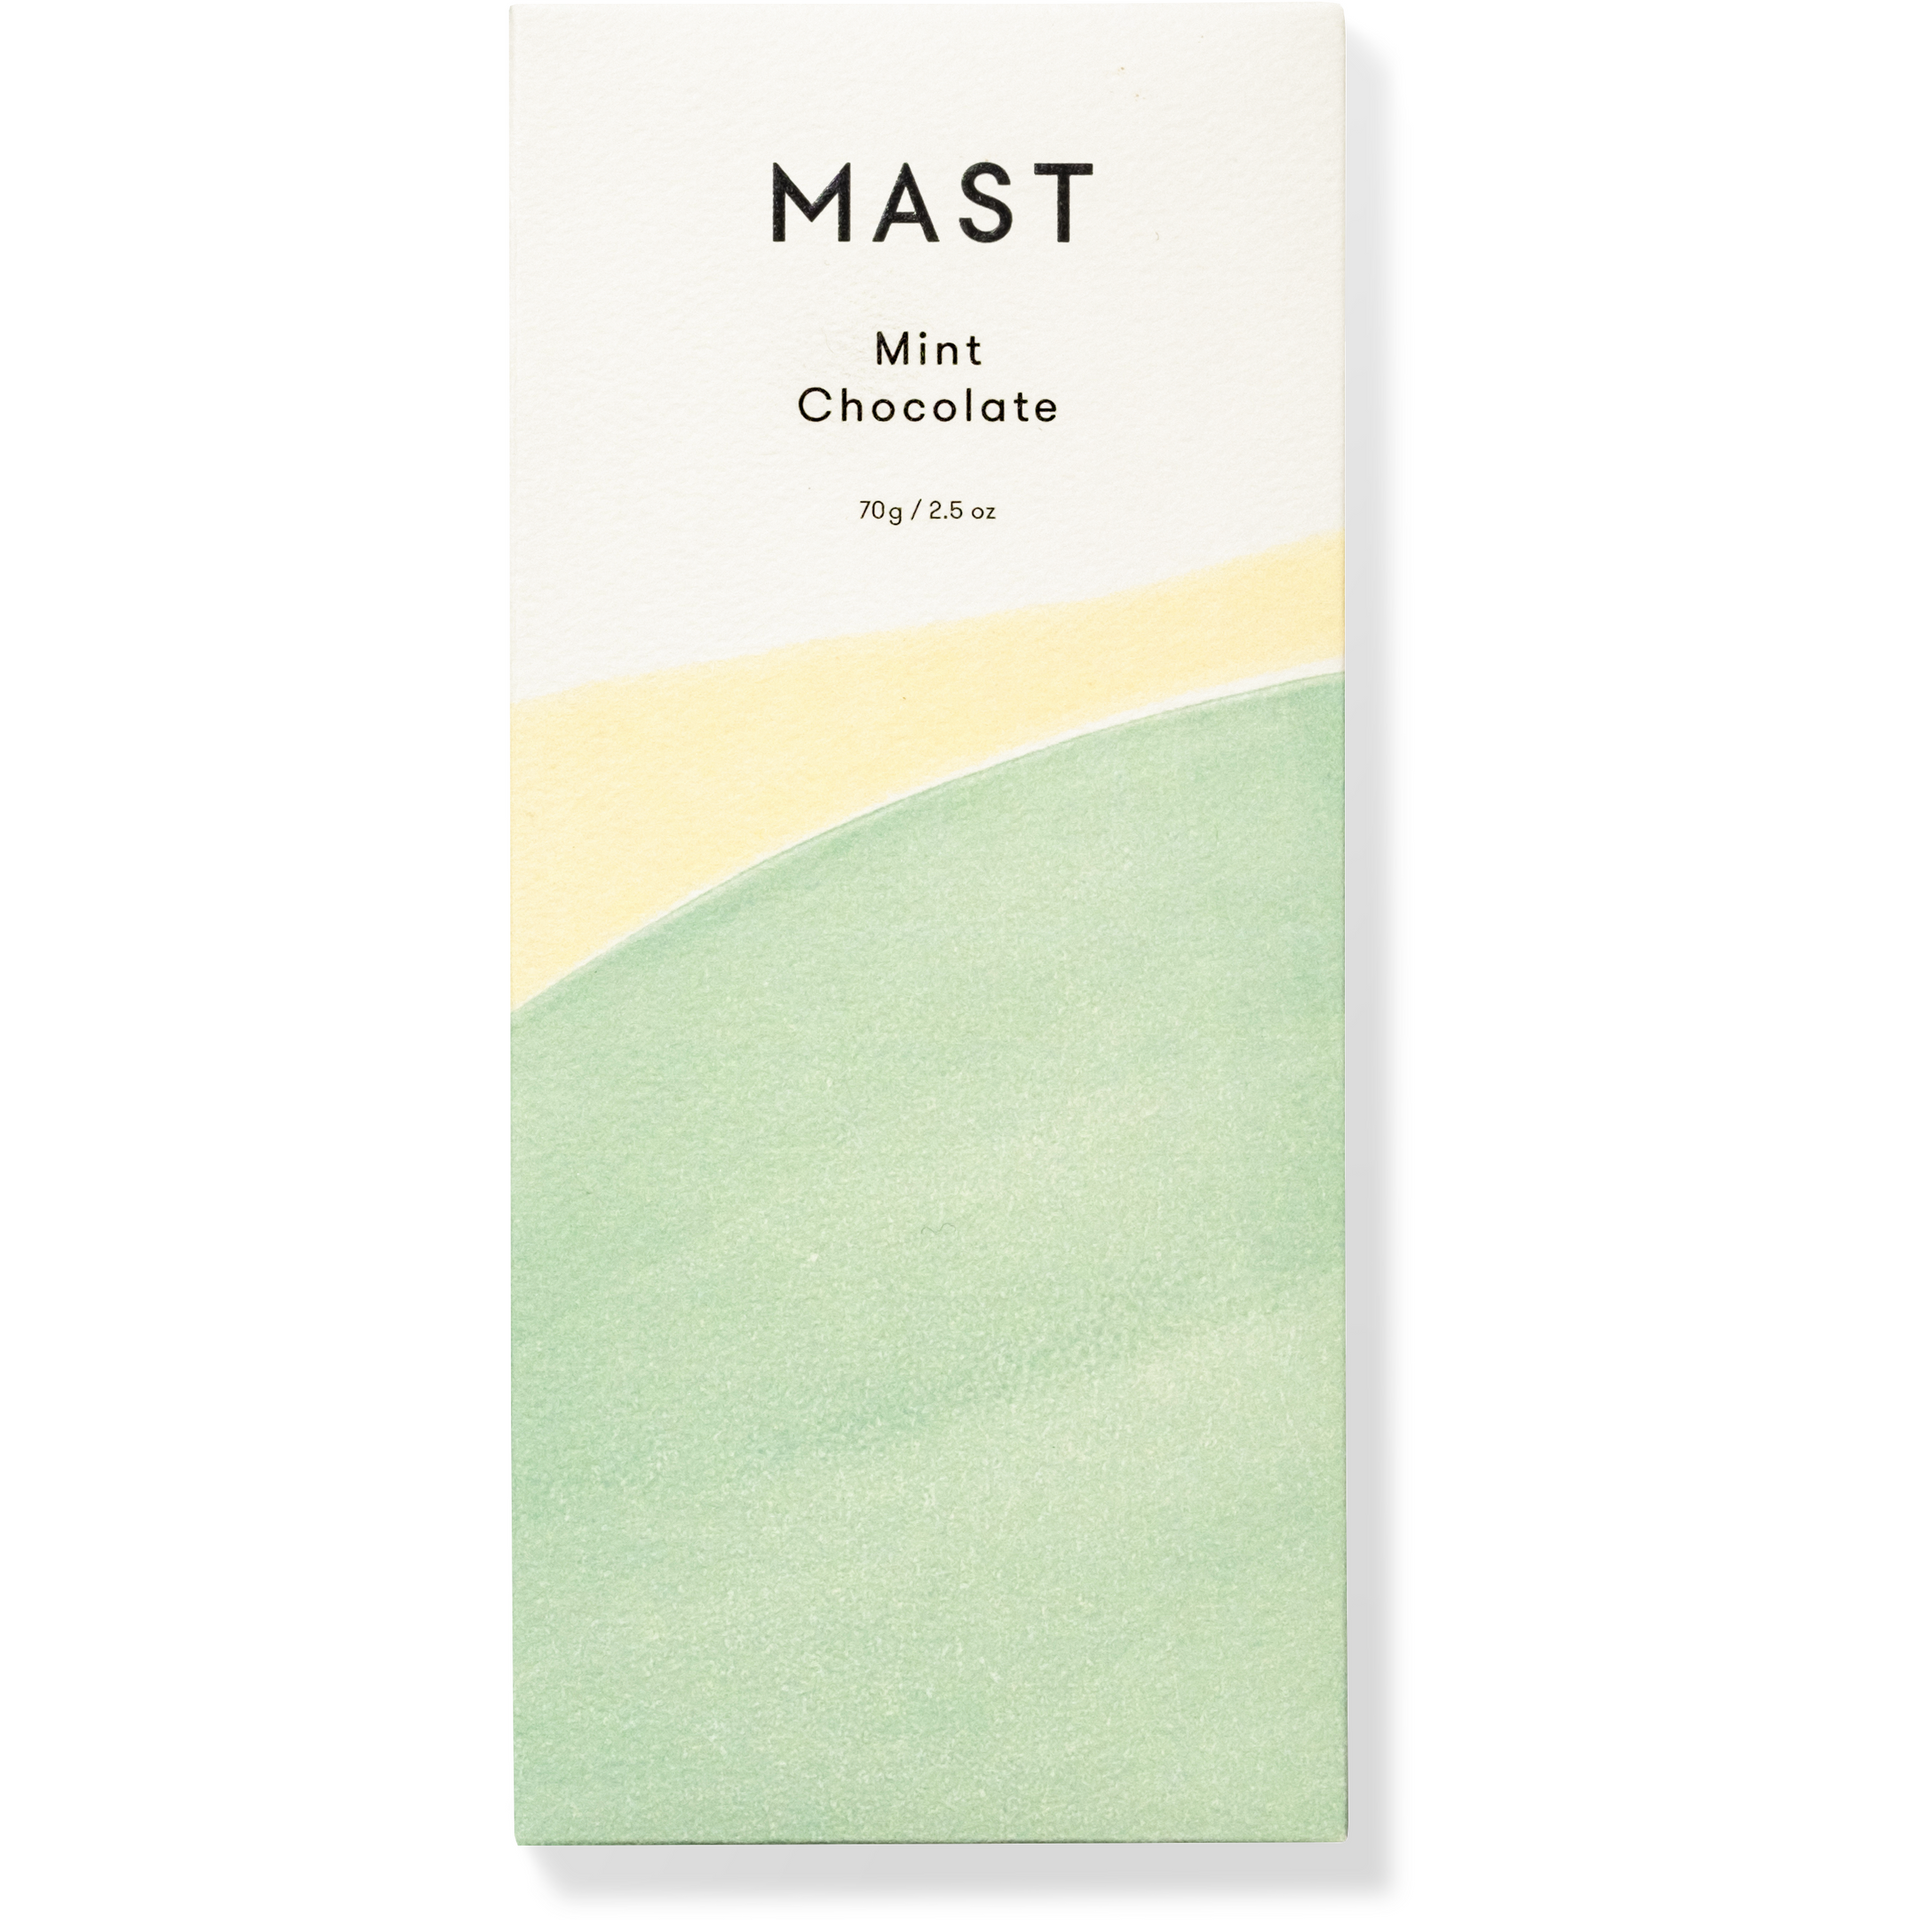 Mint Chocolate - Classic  Mast   